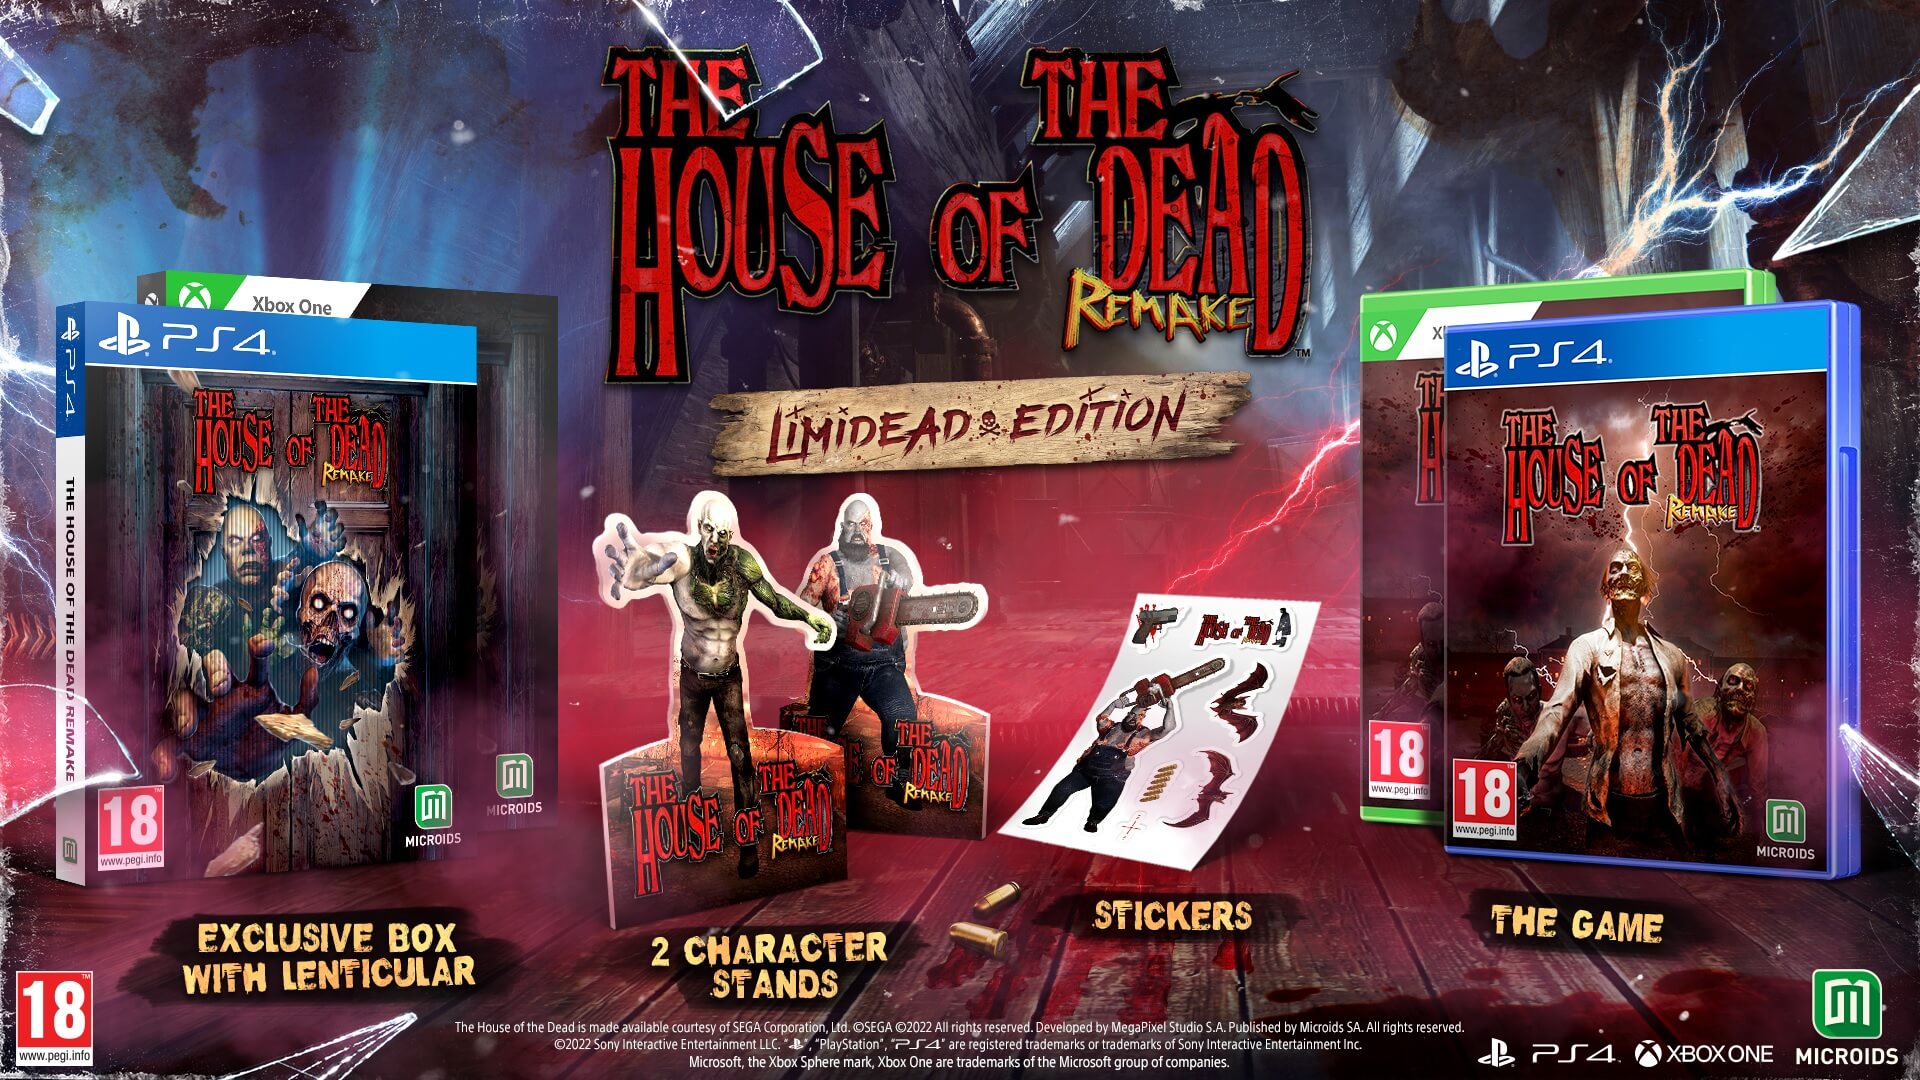 The House of the Dead Remake: Limidead Edition llegará a PS4 este año